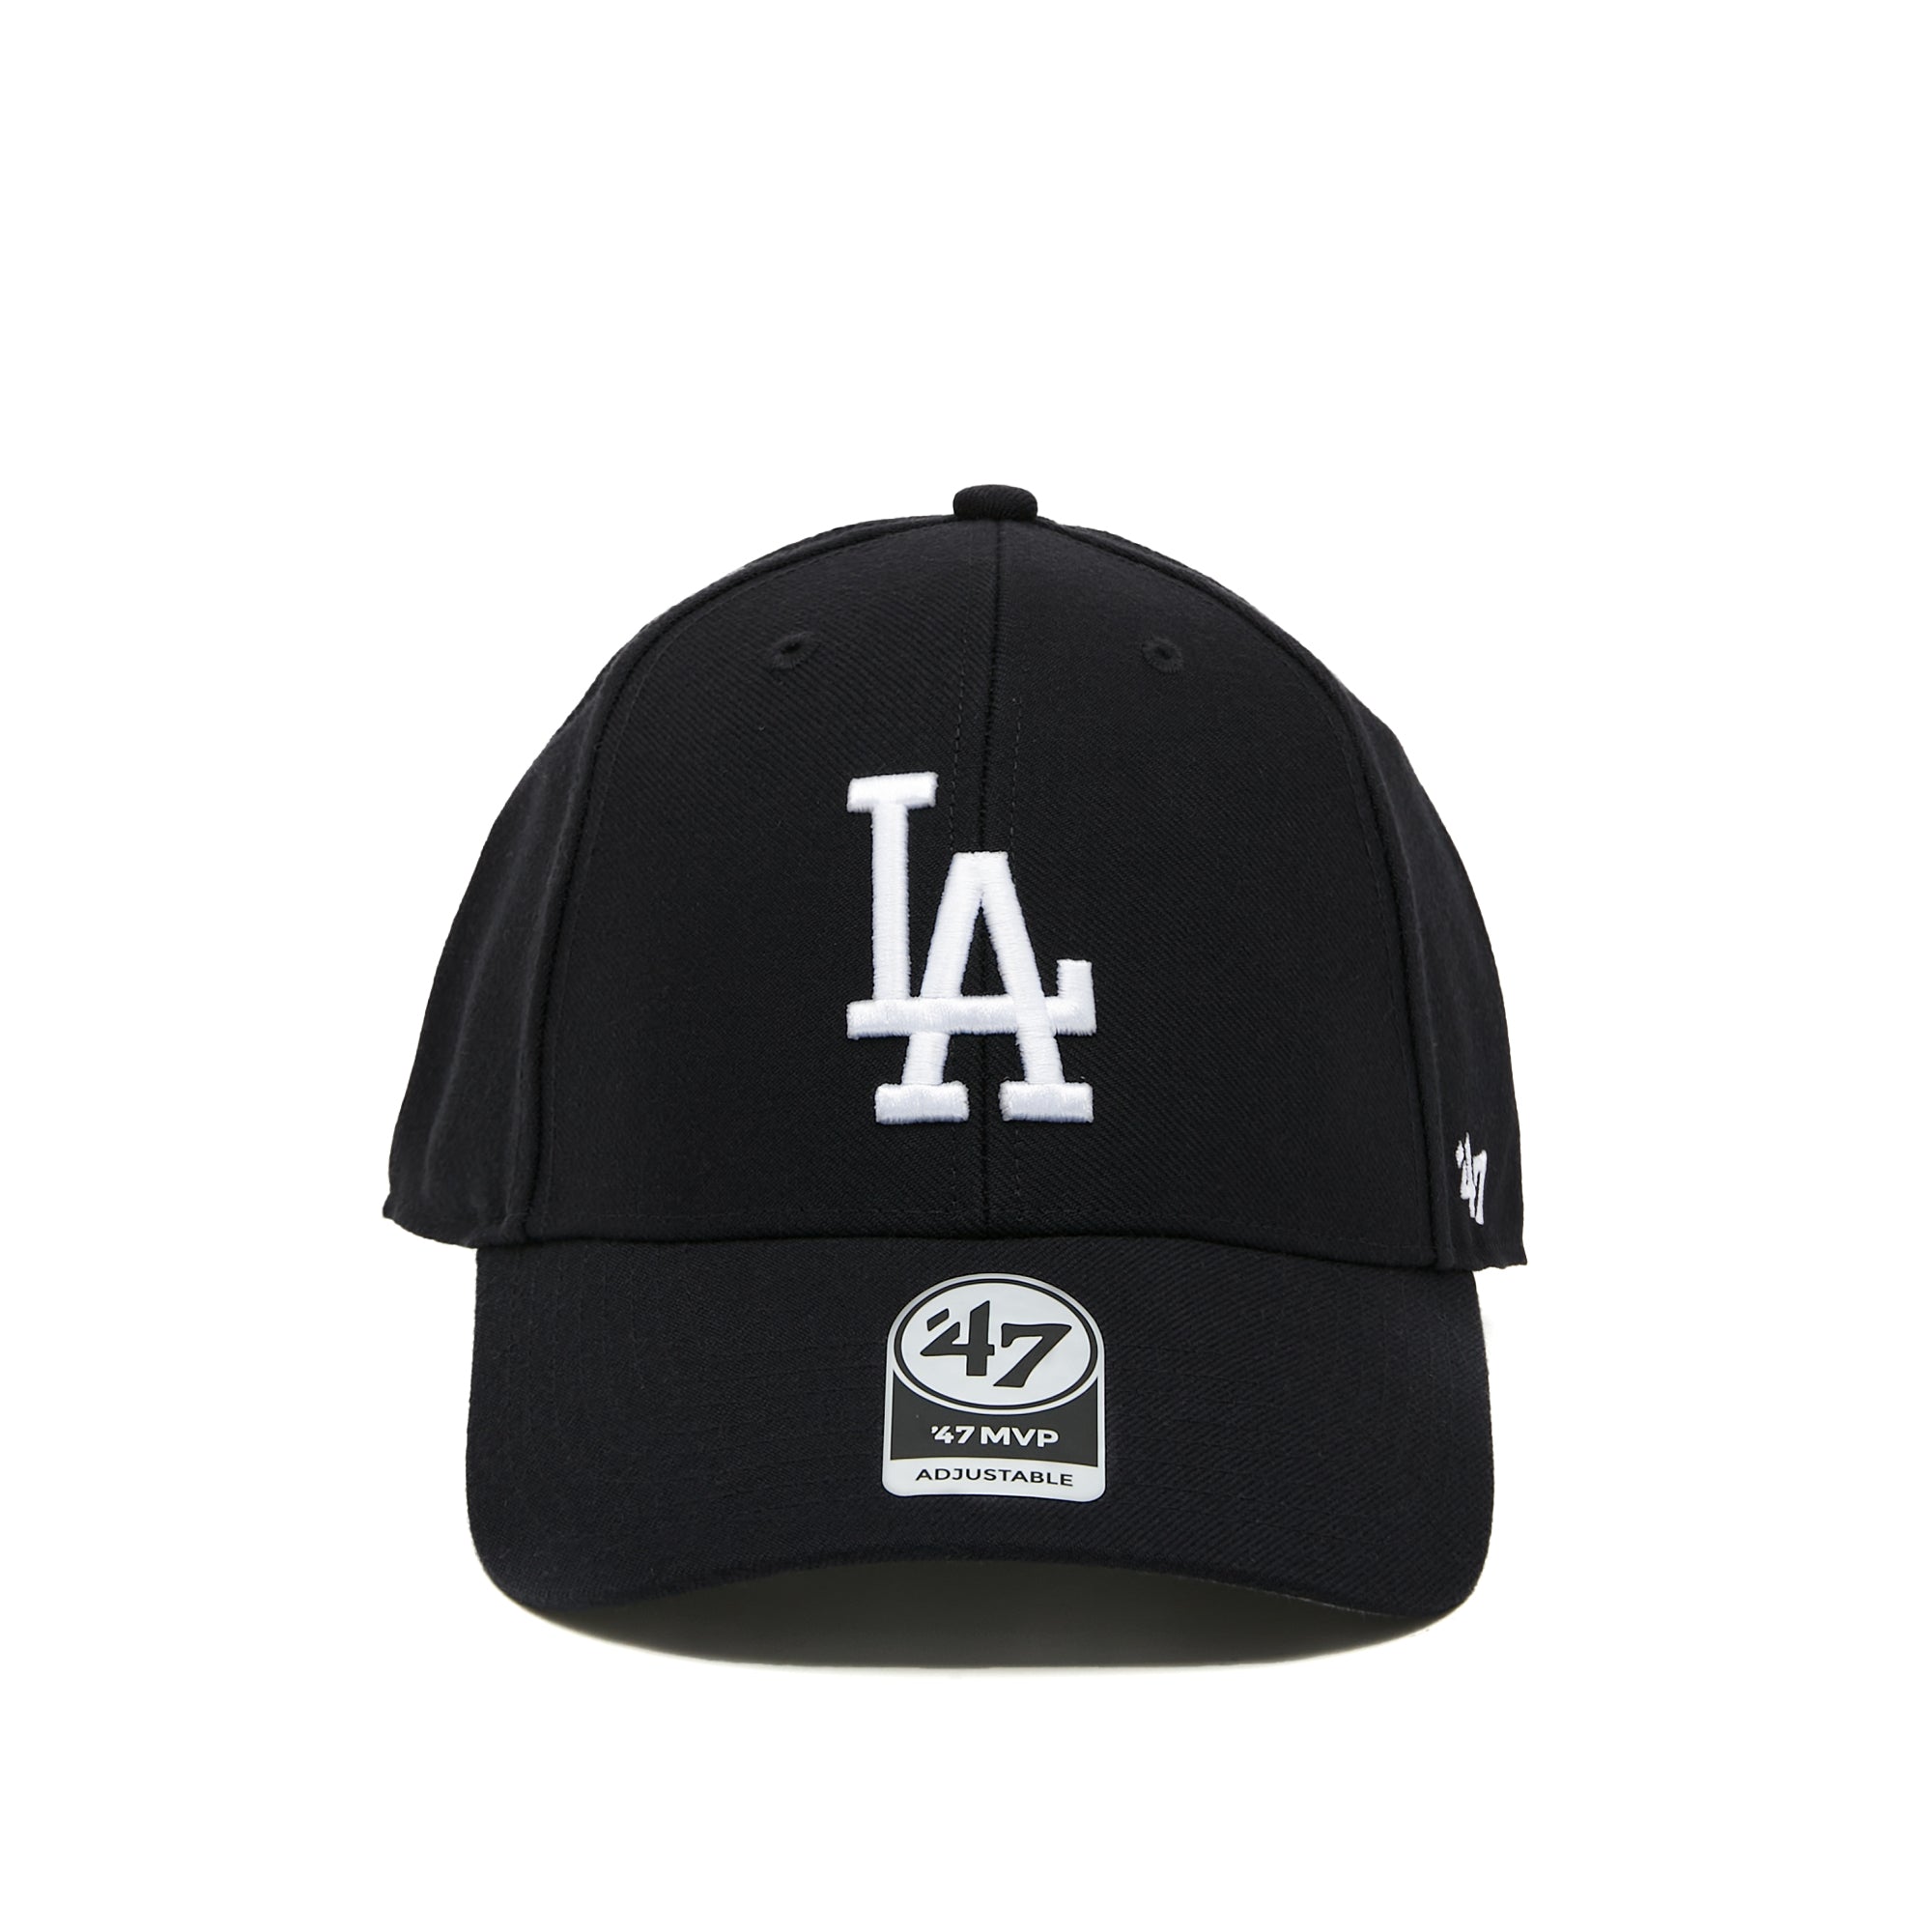 MLB Los Angeles Dodgers '47 MVP Cap Black One Size